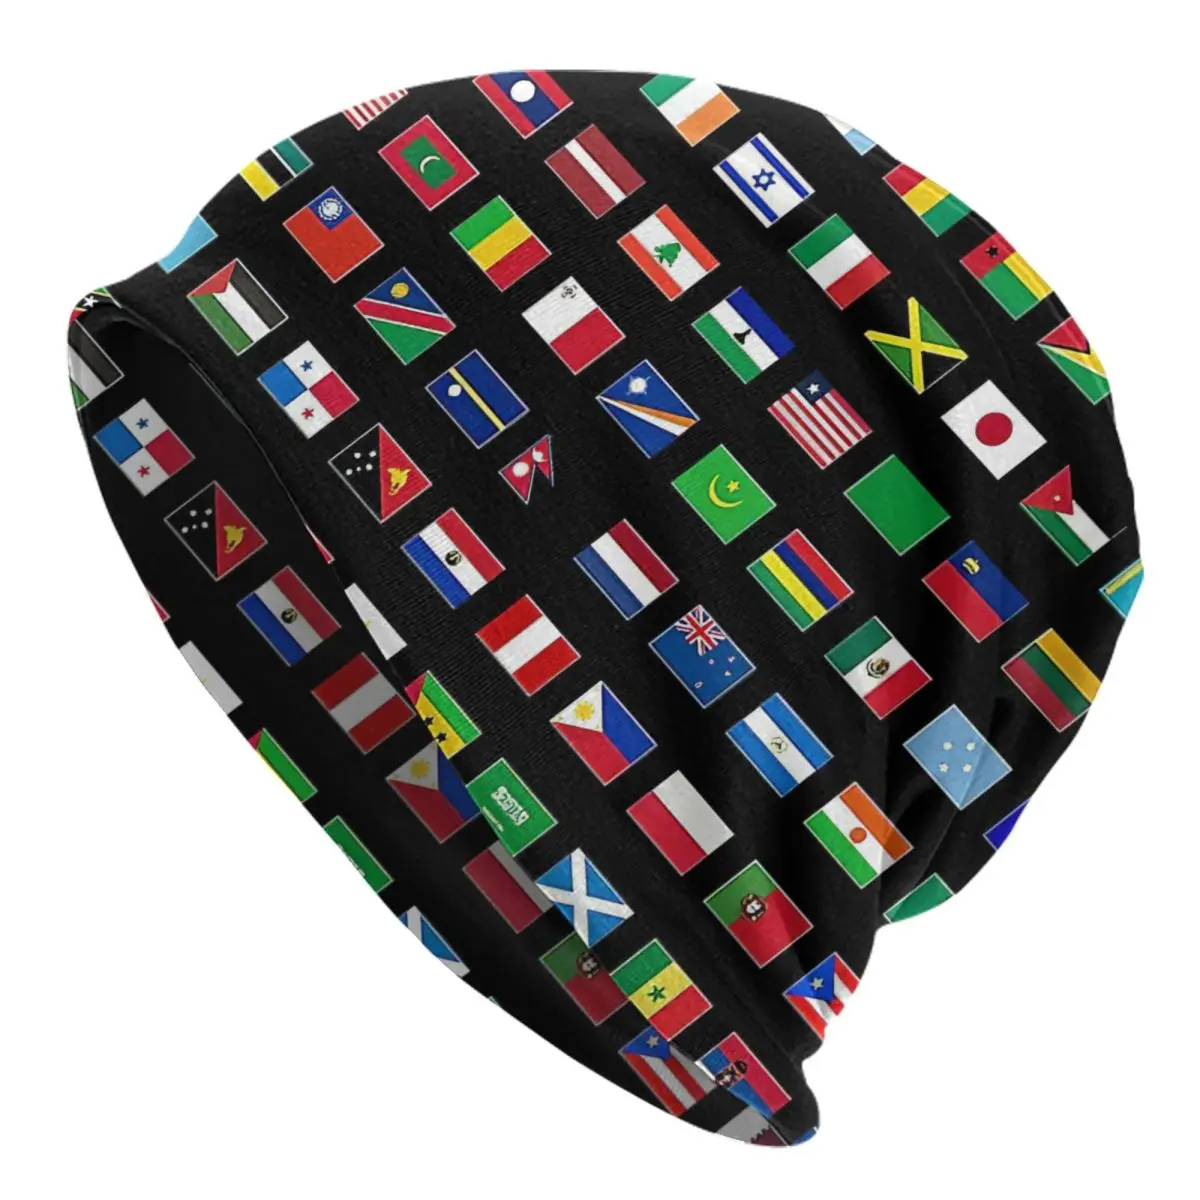 The Flags Of The World Caps Men Women Unisex Streetwear Winter Warm Knit Hat Adult funny Hats